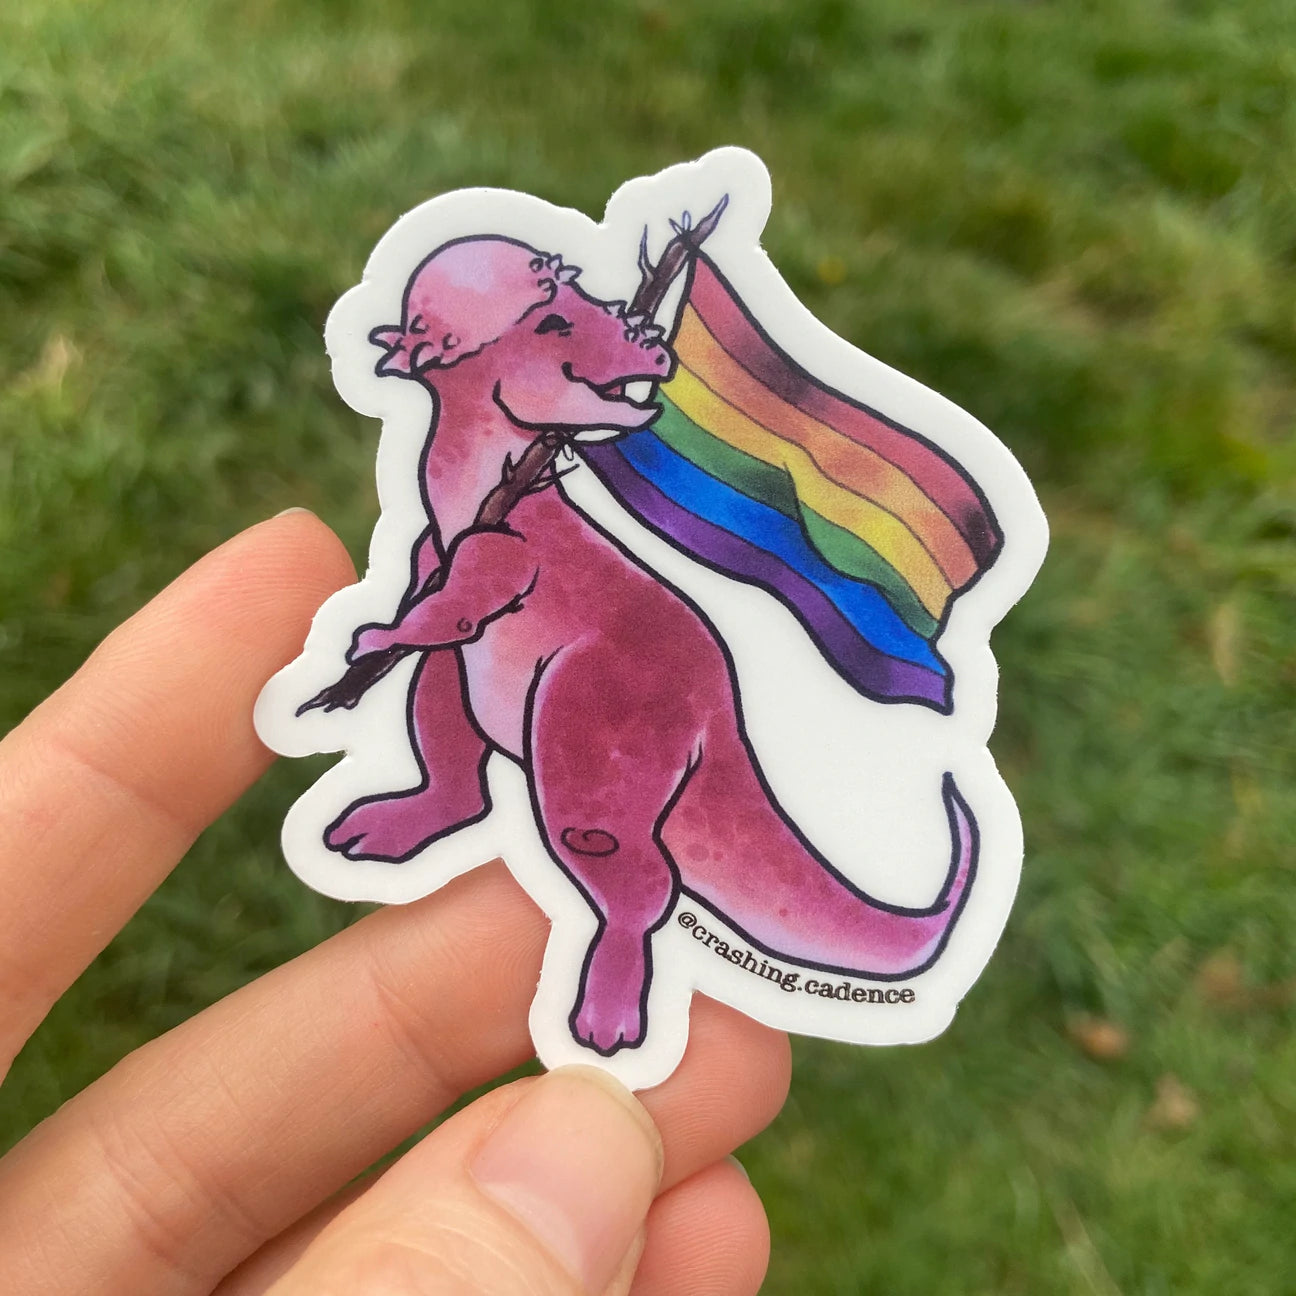 Ste-GAY-saurus | Pride Dinosaur Sticker